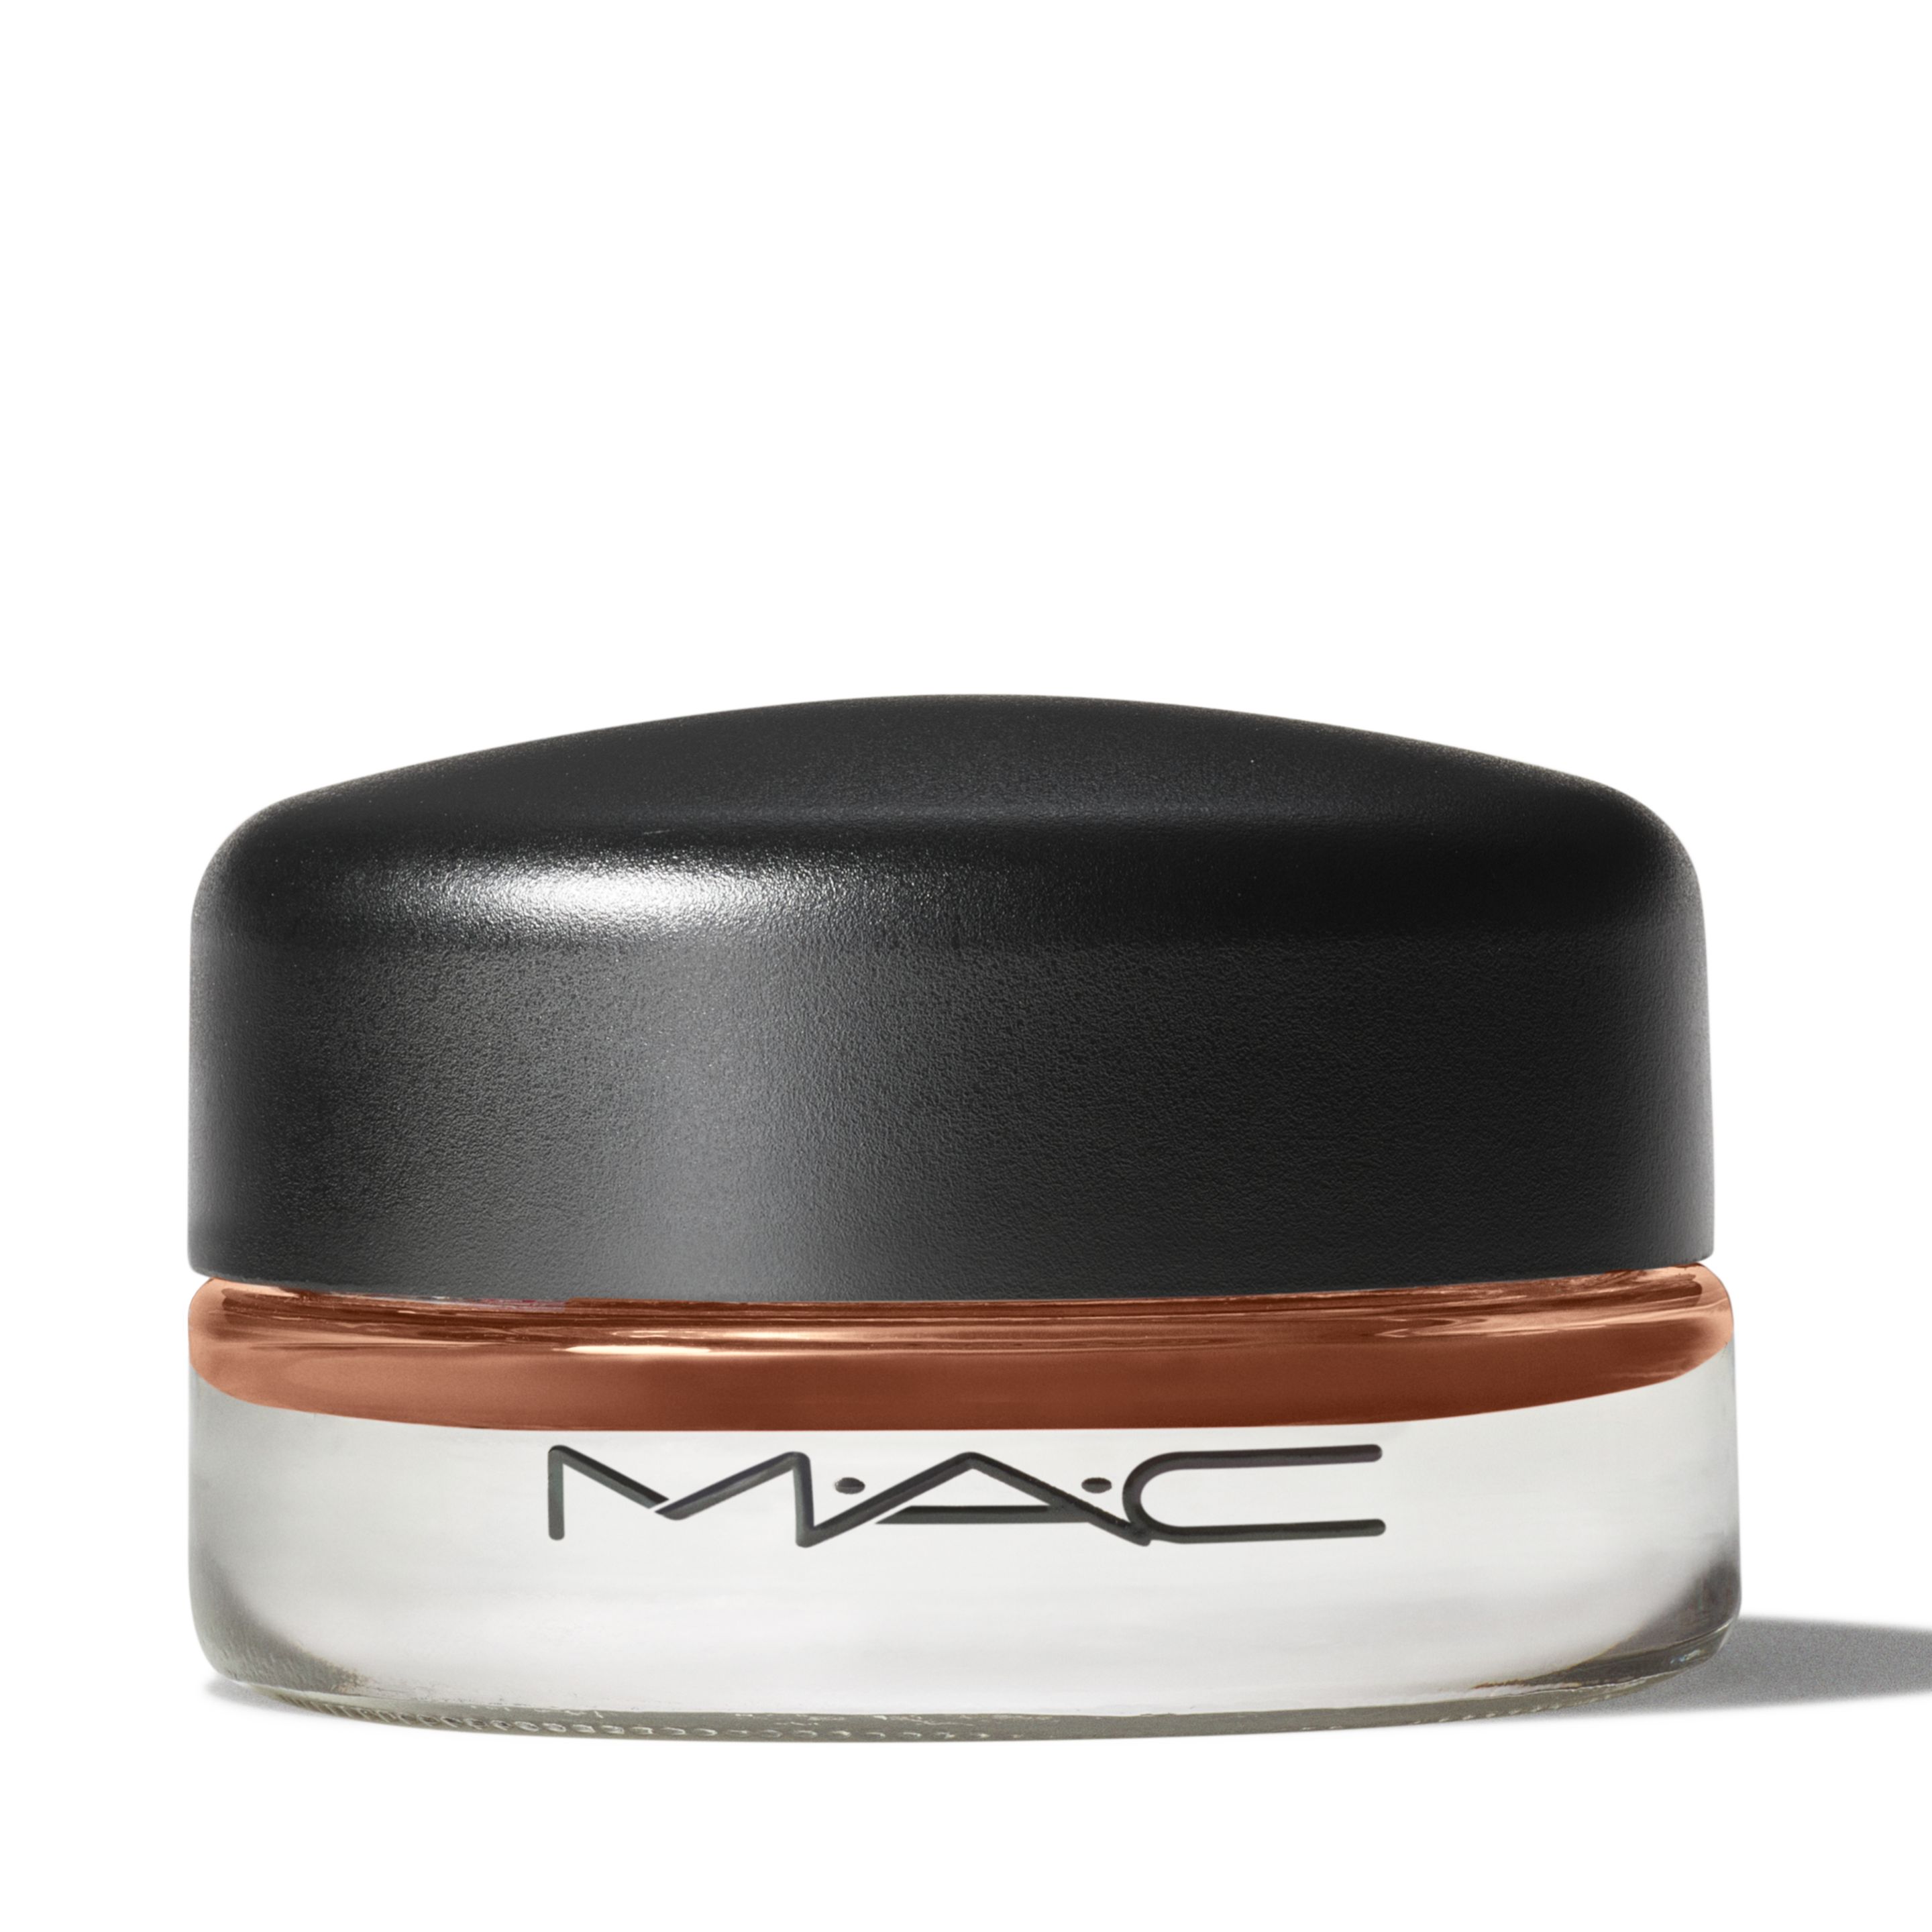 Тени для век MAC Pro Longwear Paint Pot кремовые, It's Fabstract, 5 г lilo тени румяна кремовые cosmic blush